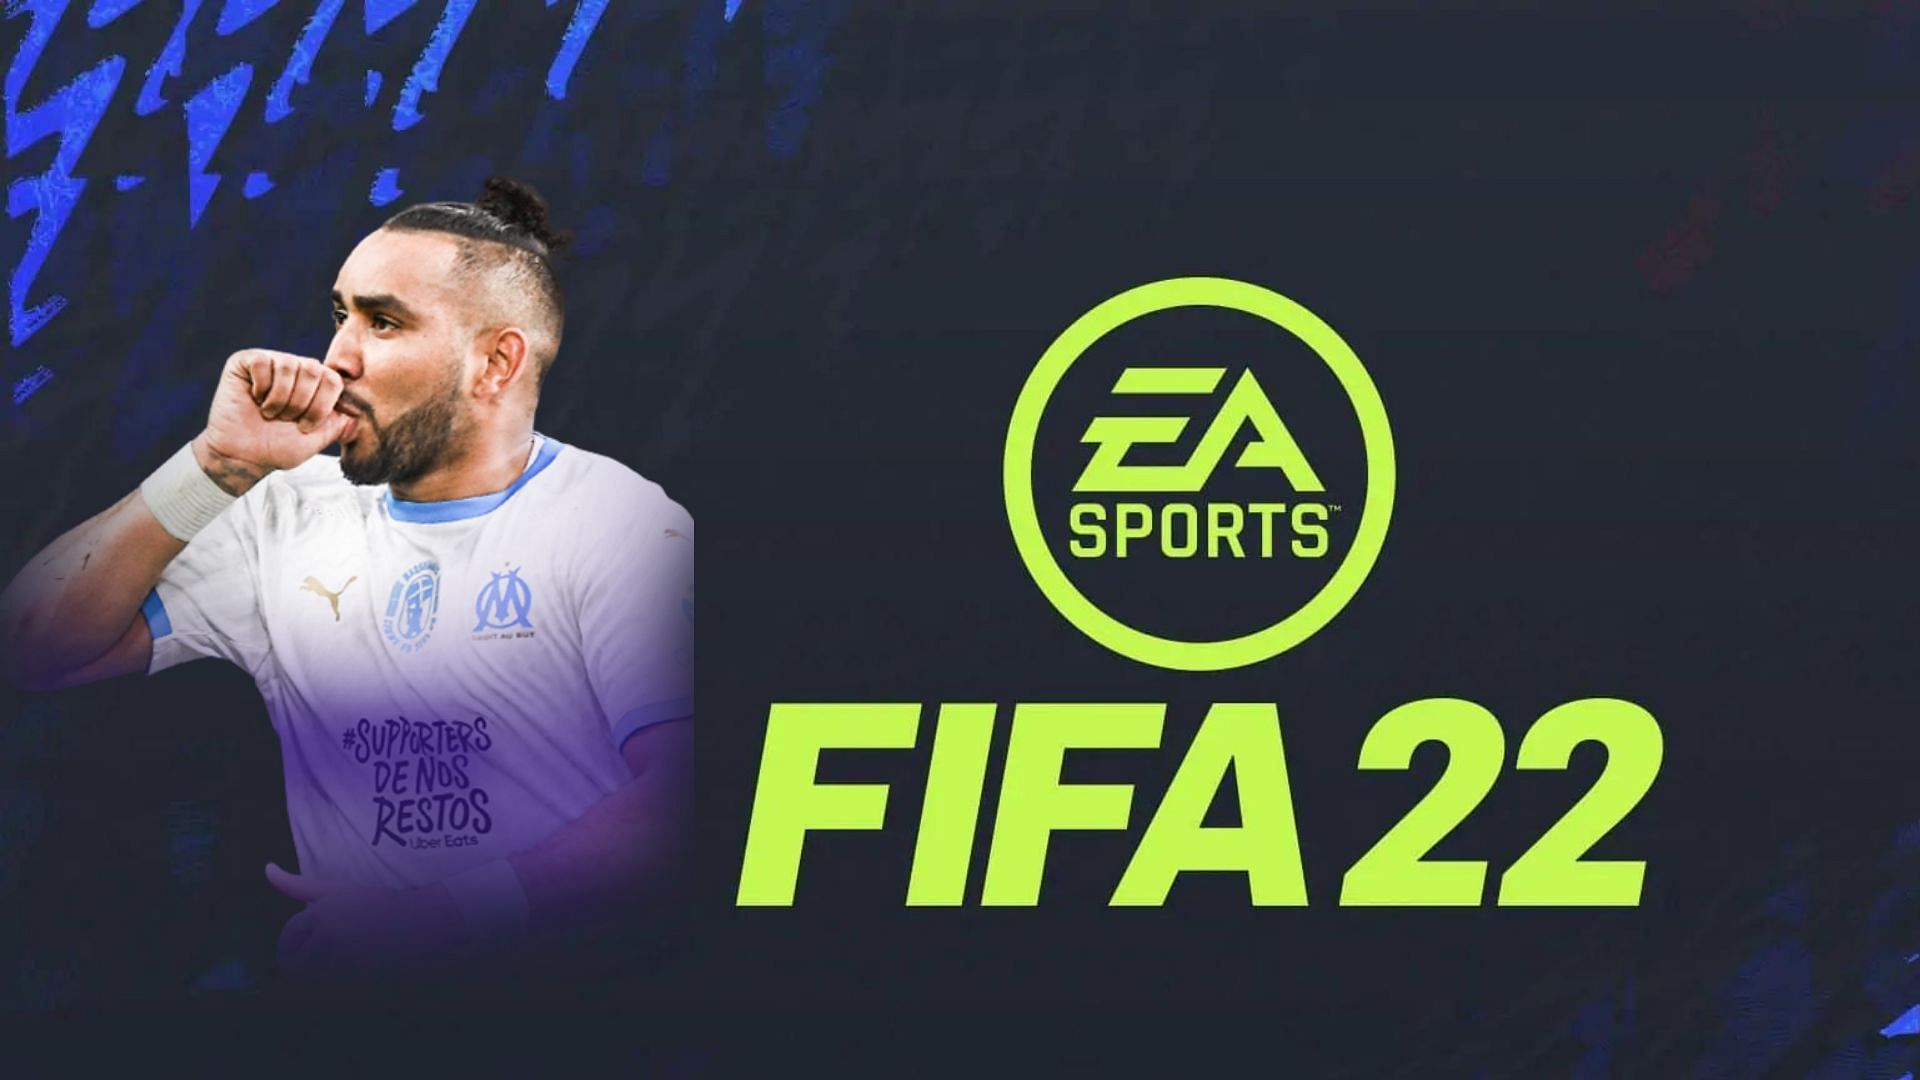 Dimitri Payet Headliners promo is now live in FIFA 22 (Image via Sportskeeda)